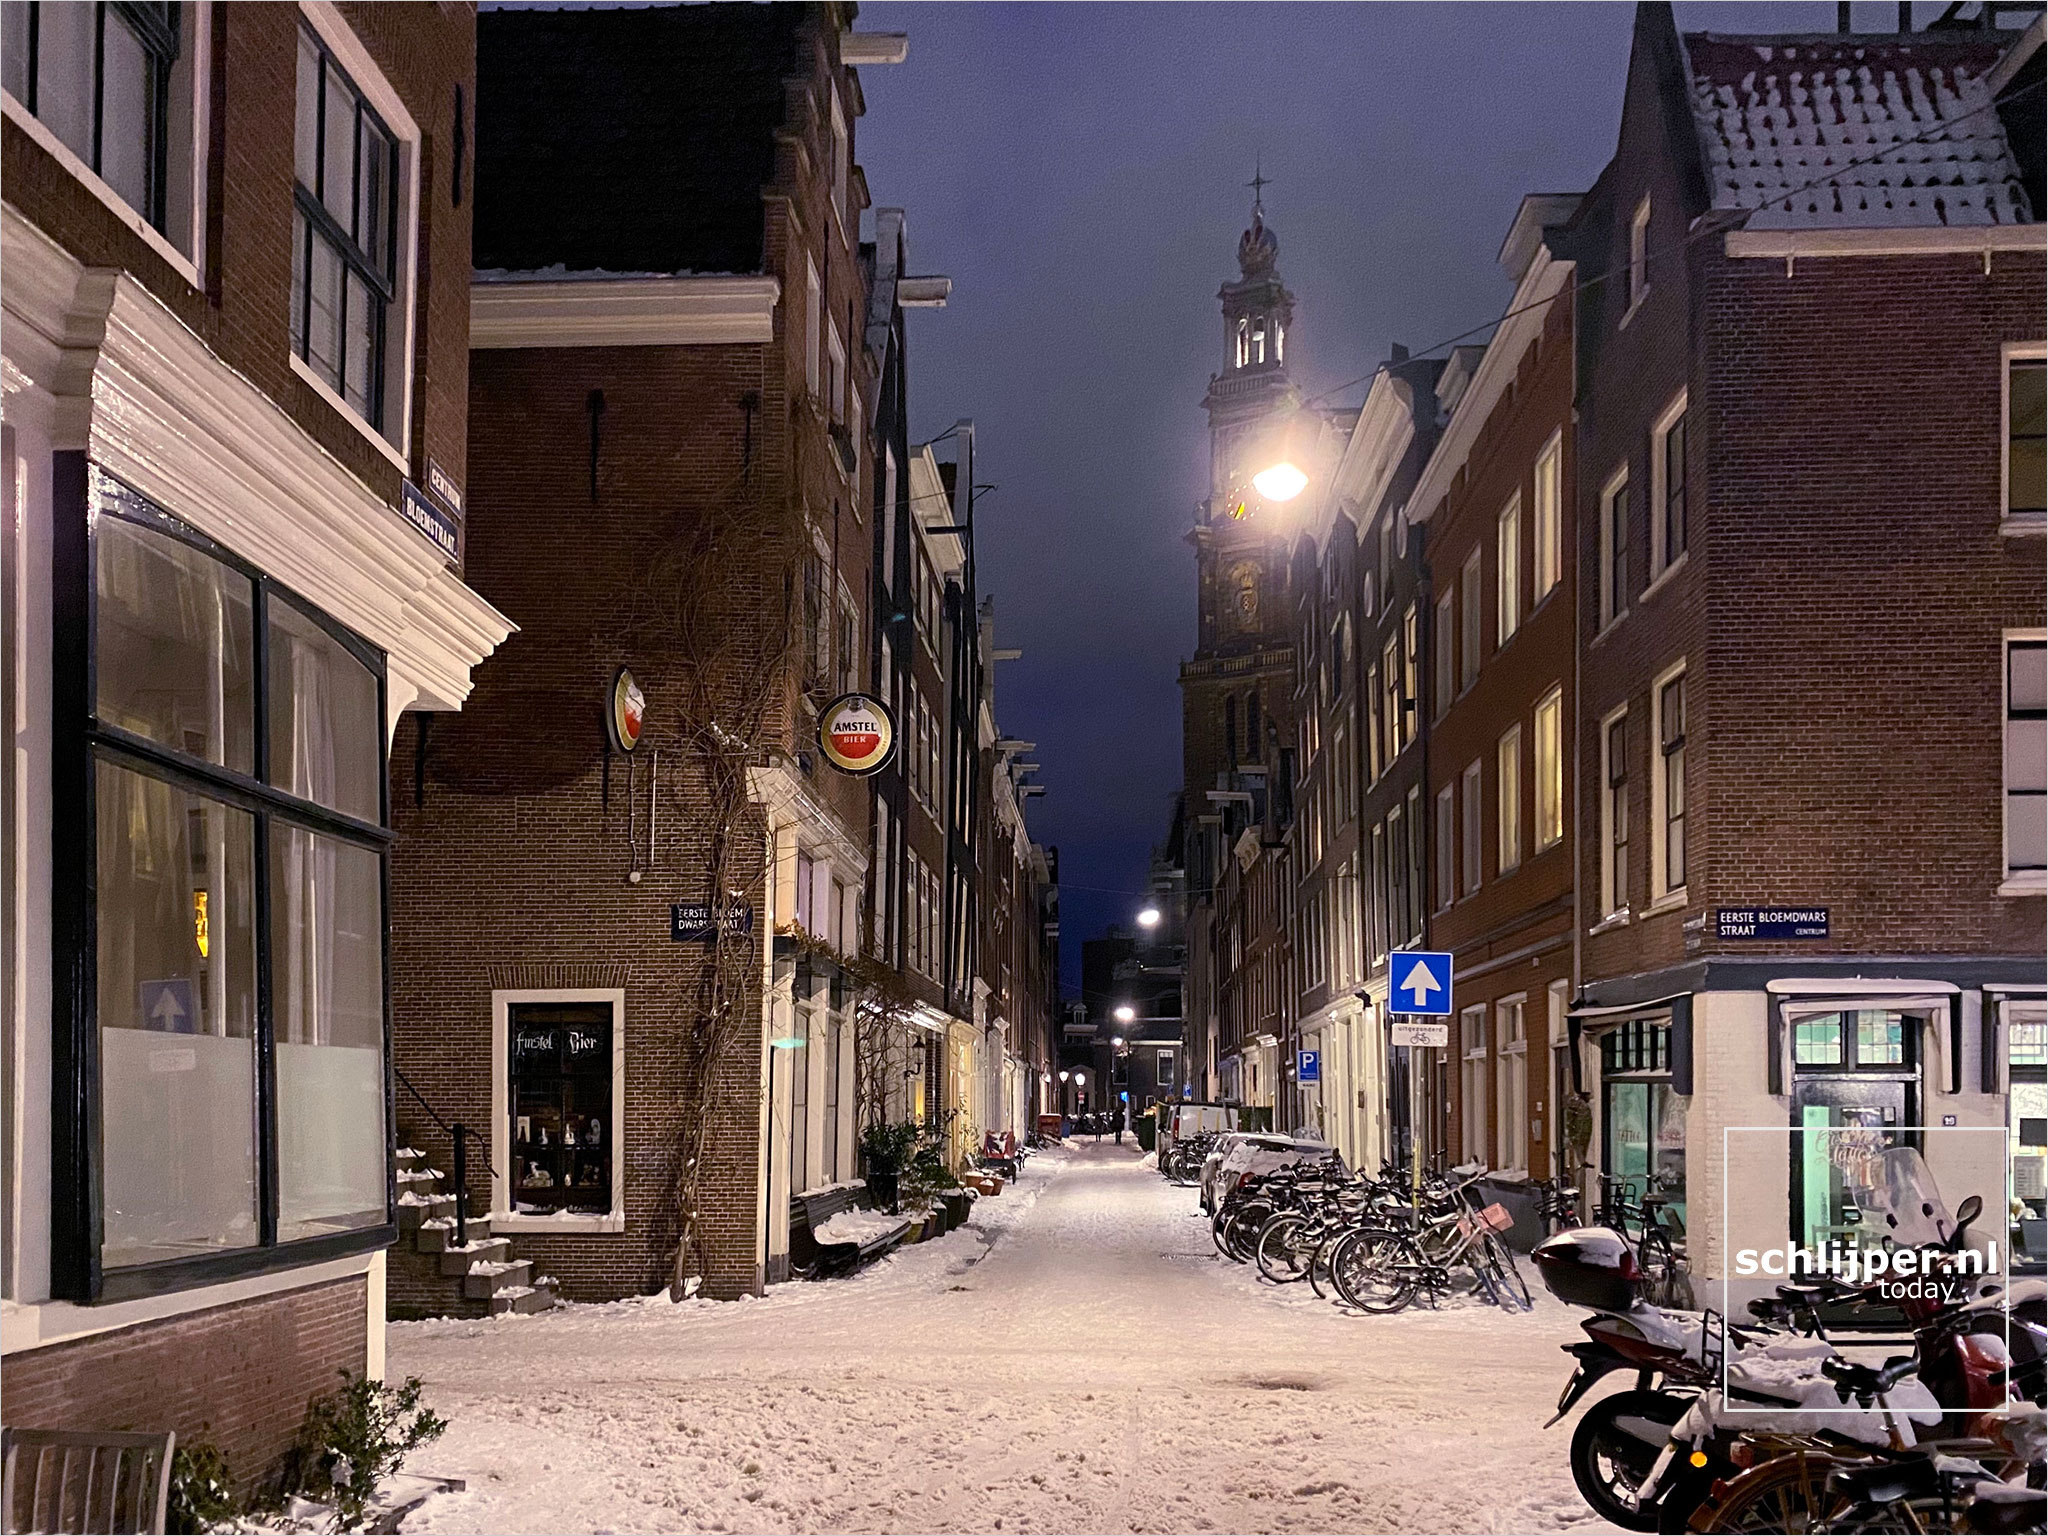 The Netherlands, Amsterdam, 9 februari 2021